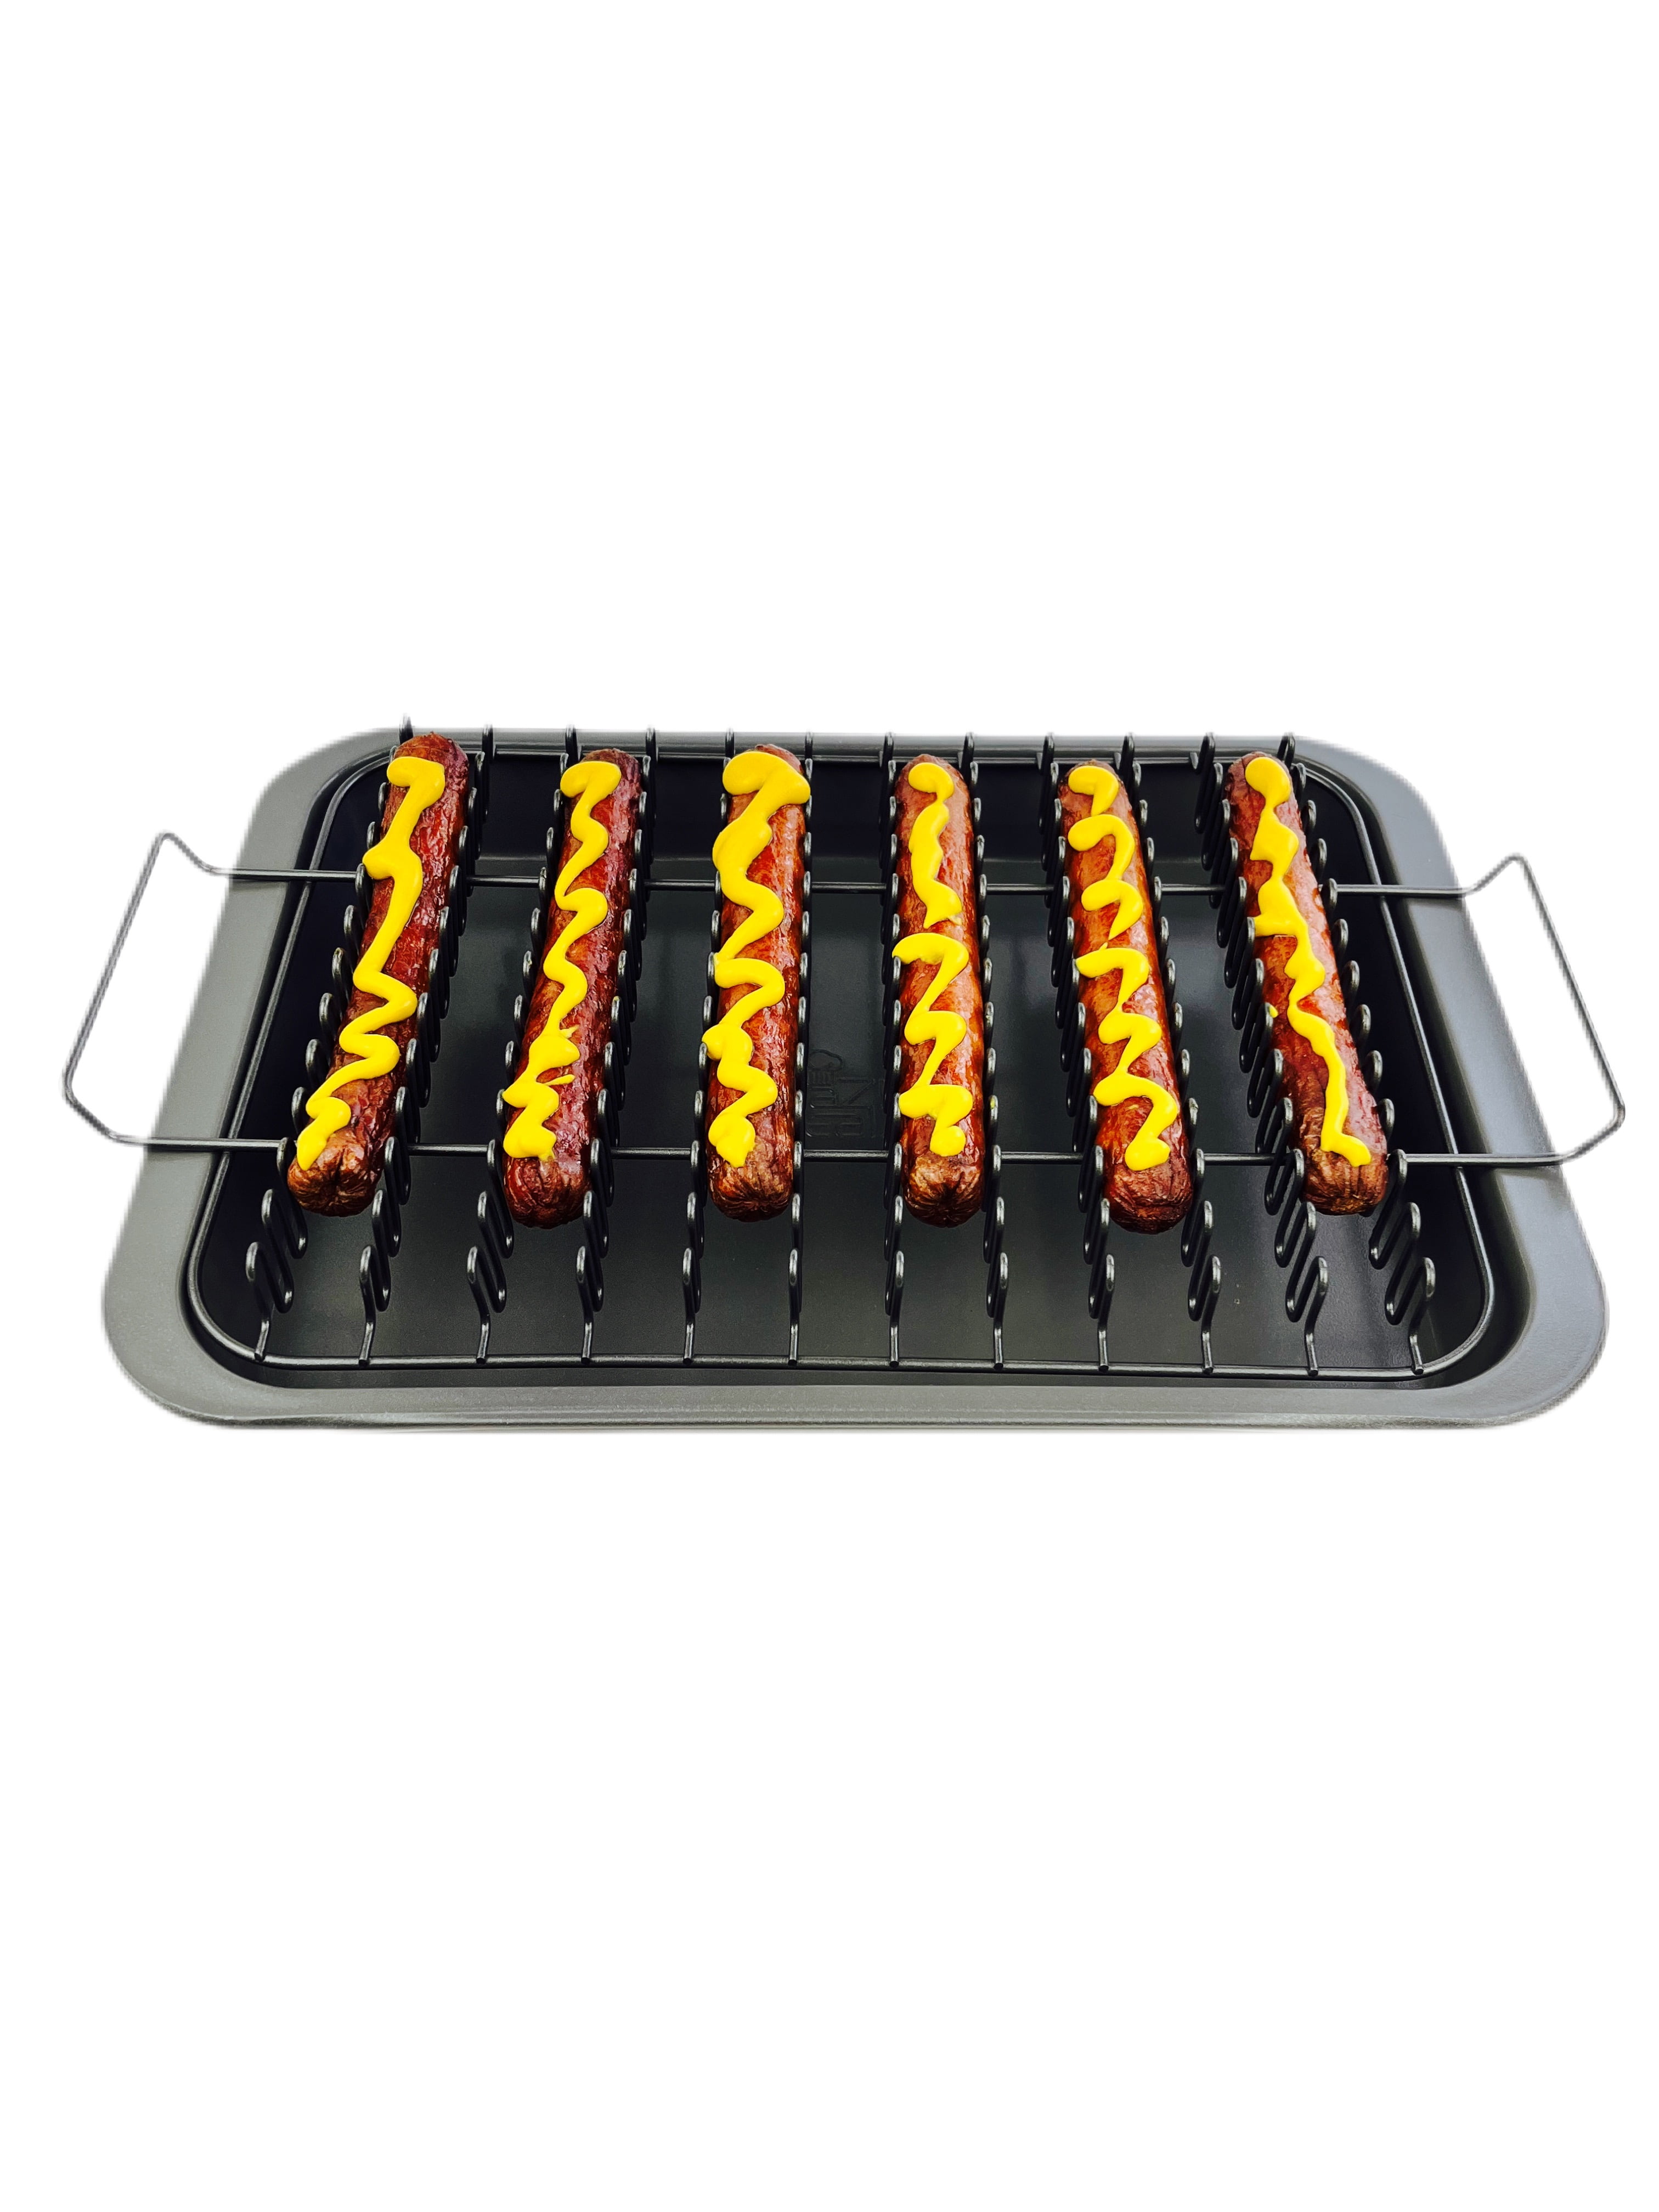 EaZy MealZ Square Bacon Rack and Crisper 3-pc Set Non-Stick for